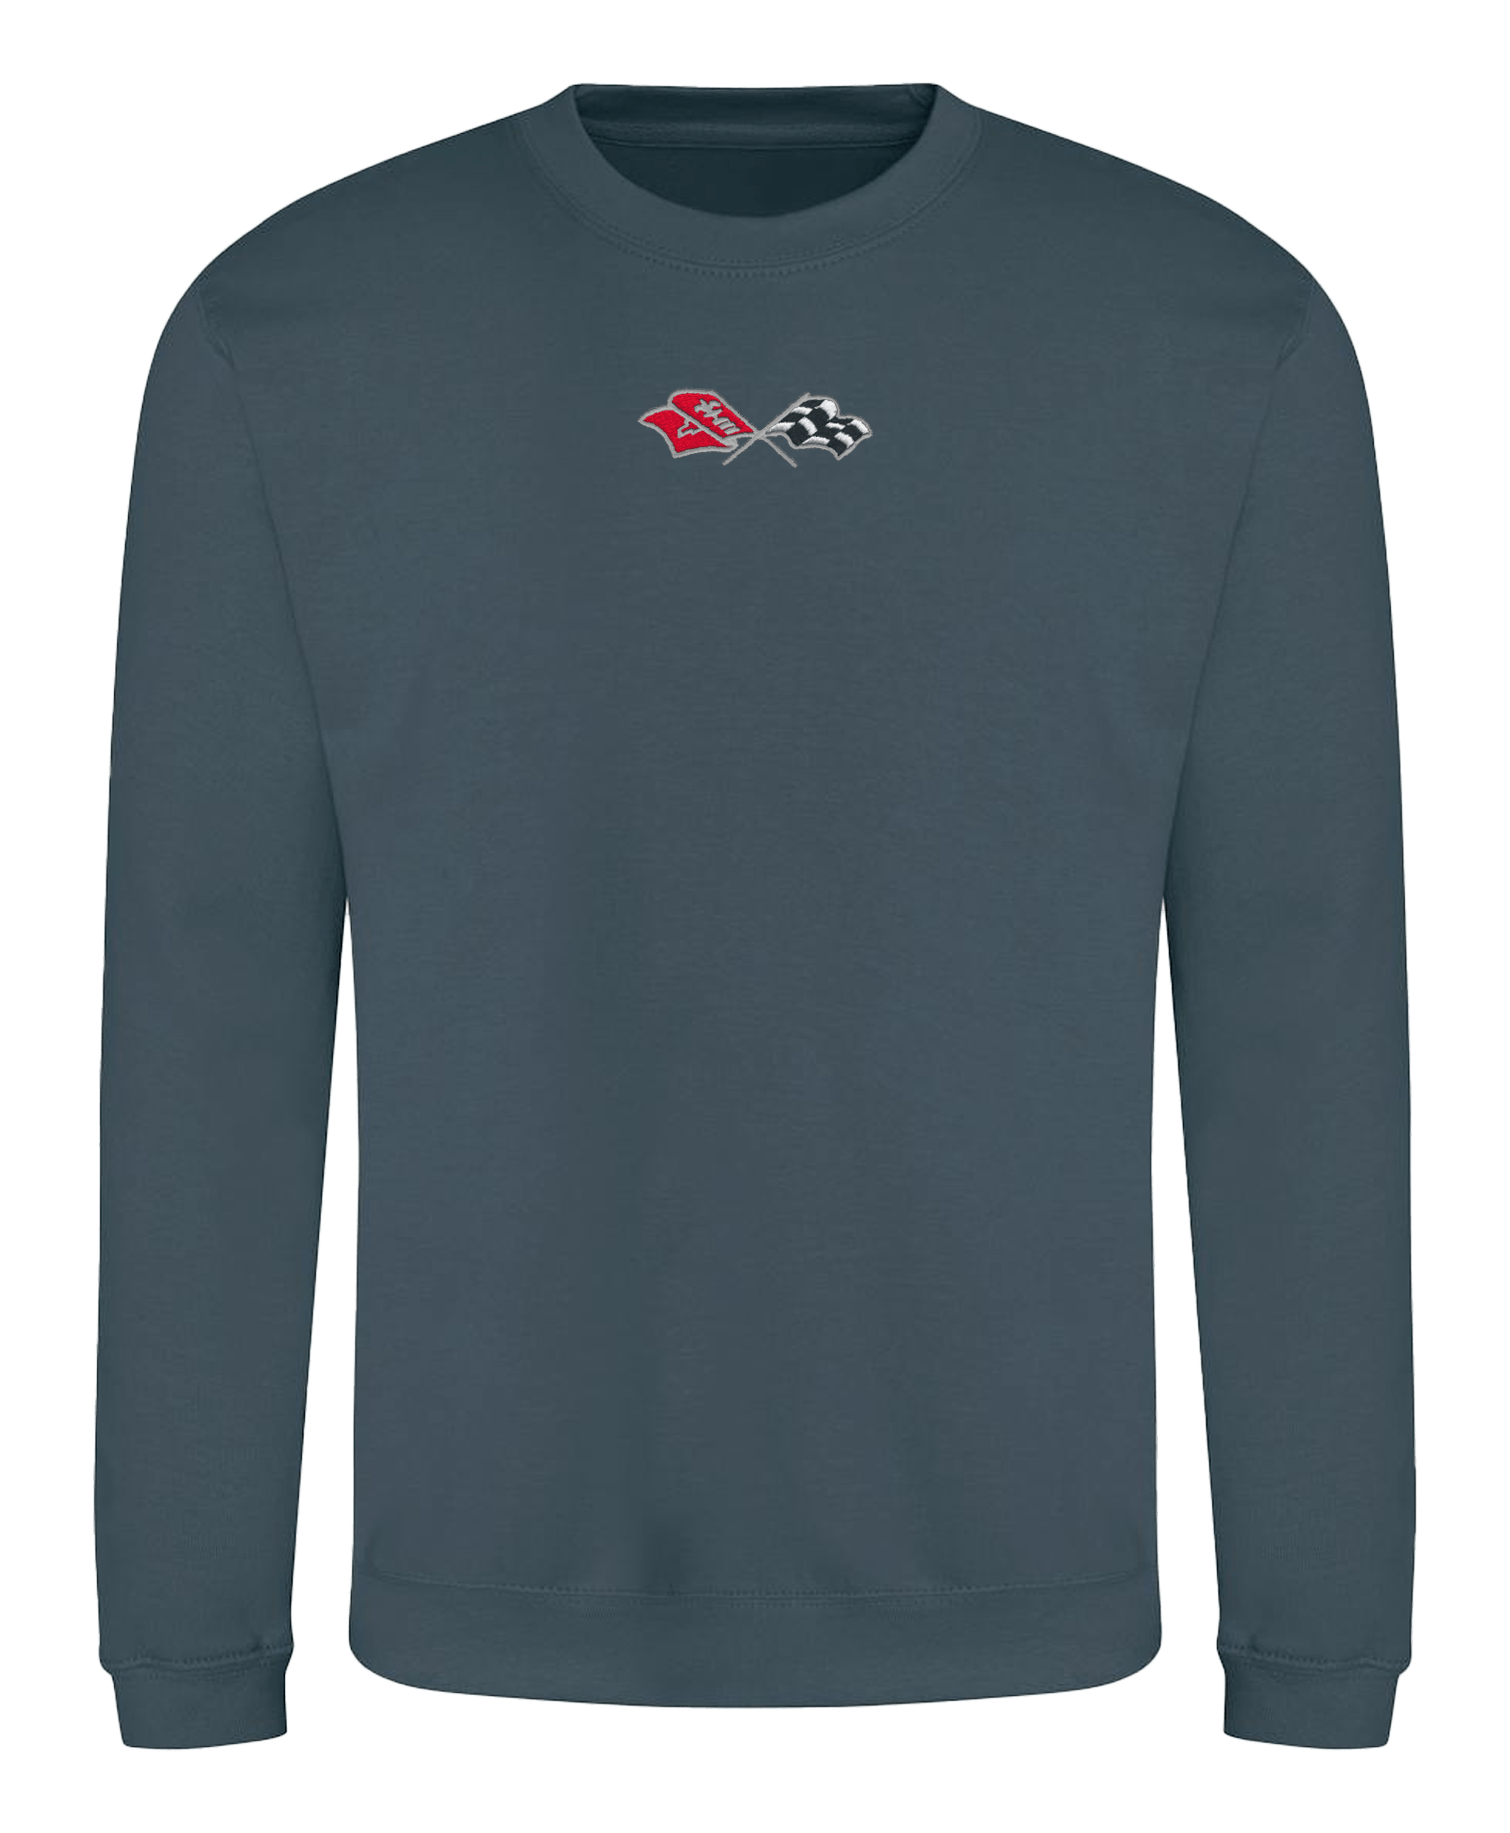 c3-corvette-embroidered-crew-neck-sweatshirt-cvr60011103-3-corvette-store-online